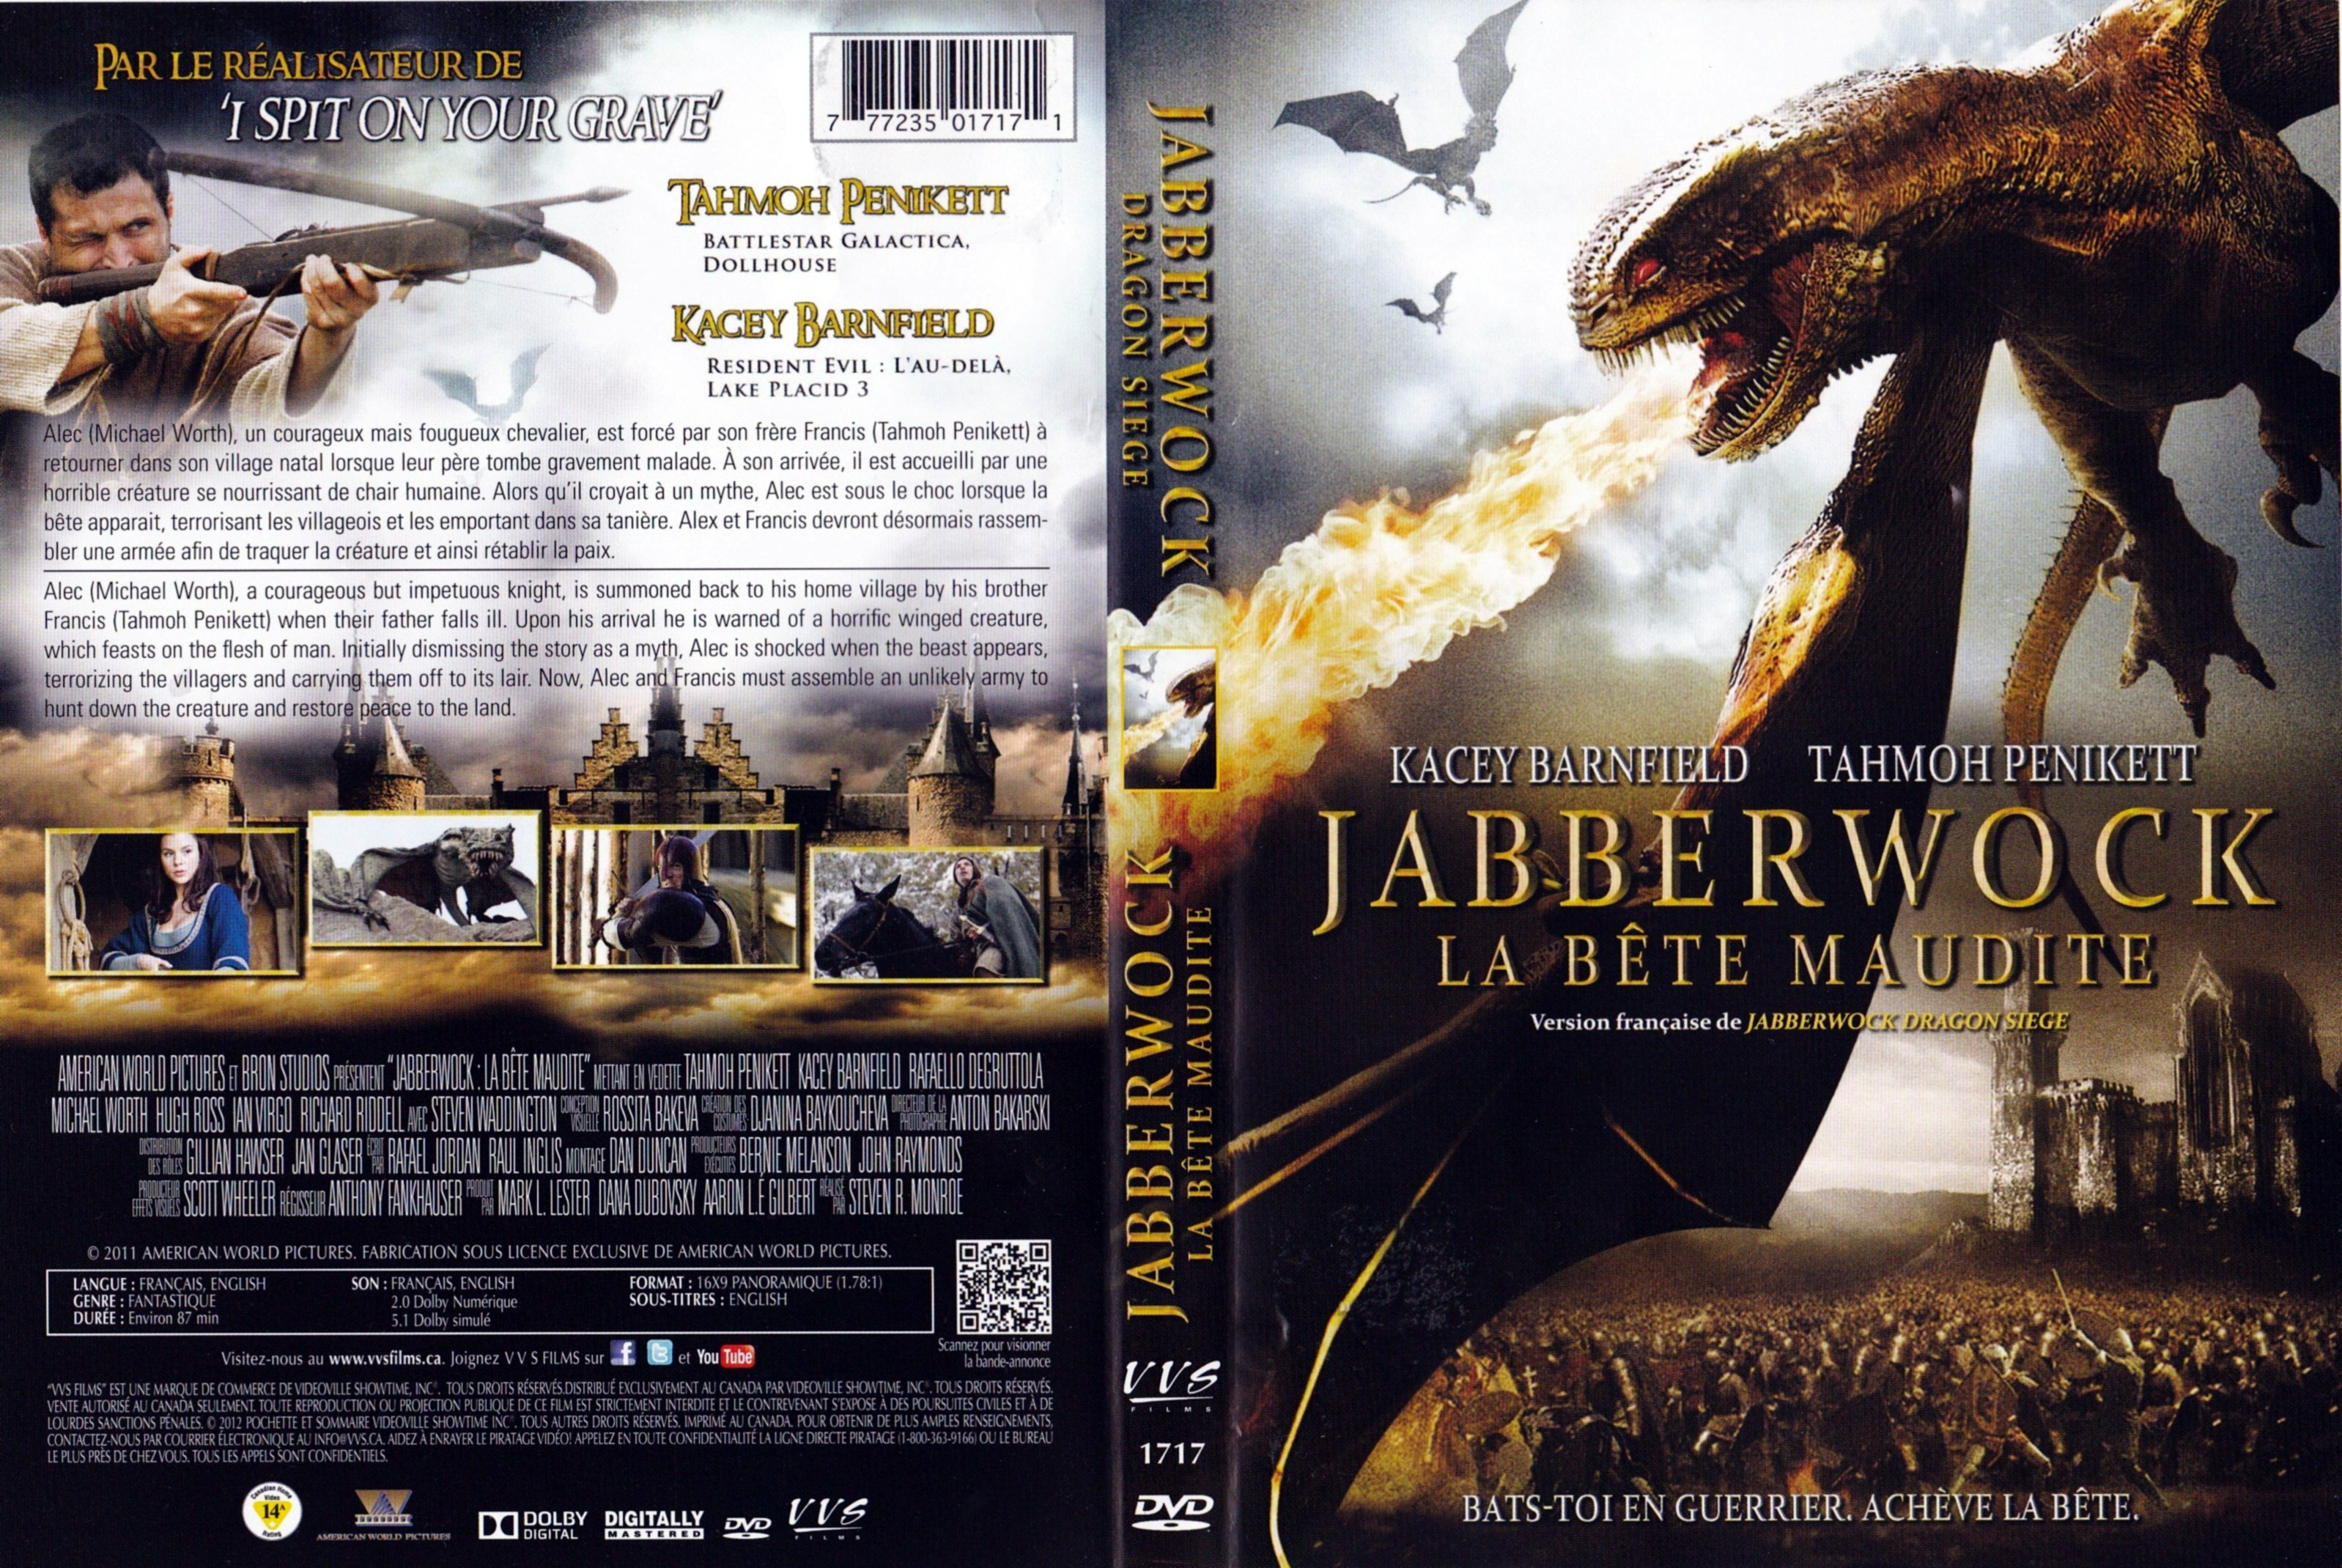 Jaquette DVD Jabberwock la bte maudite - Jabberwock dragon siege (Canadienne)